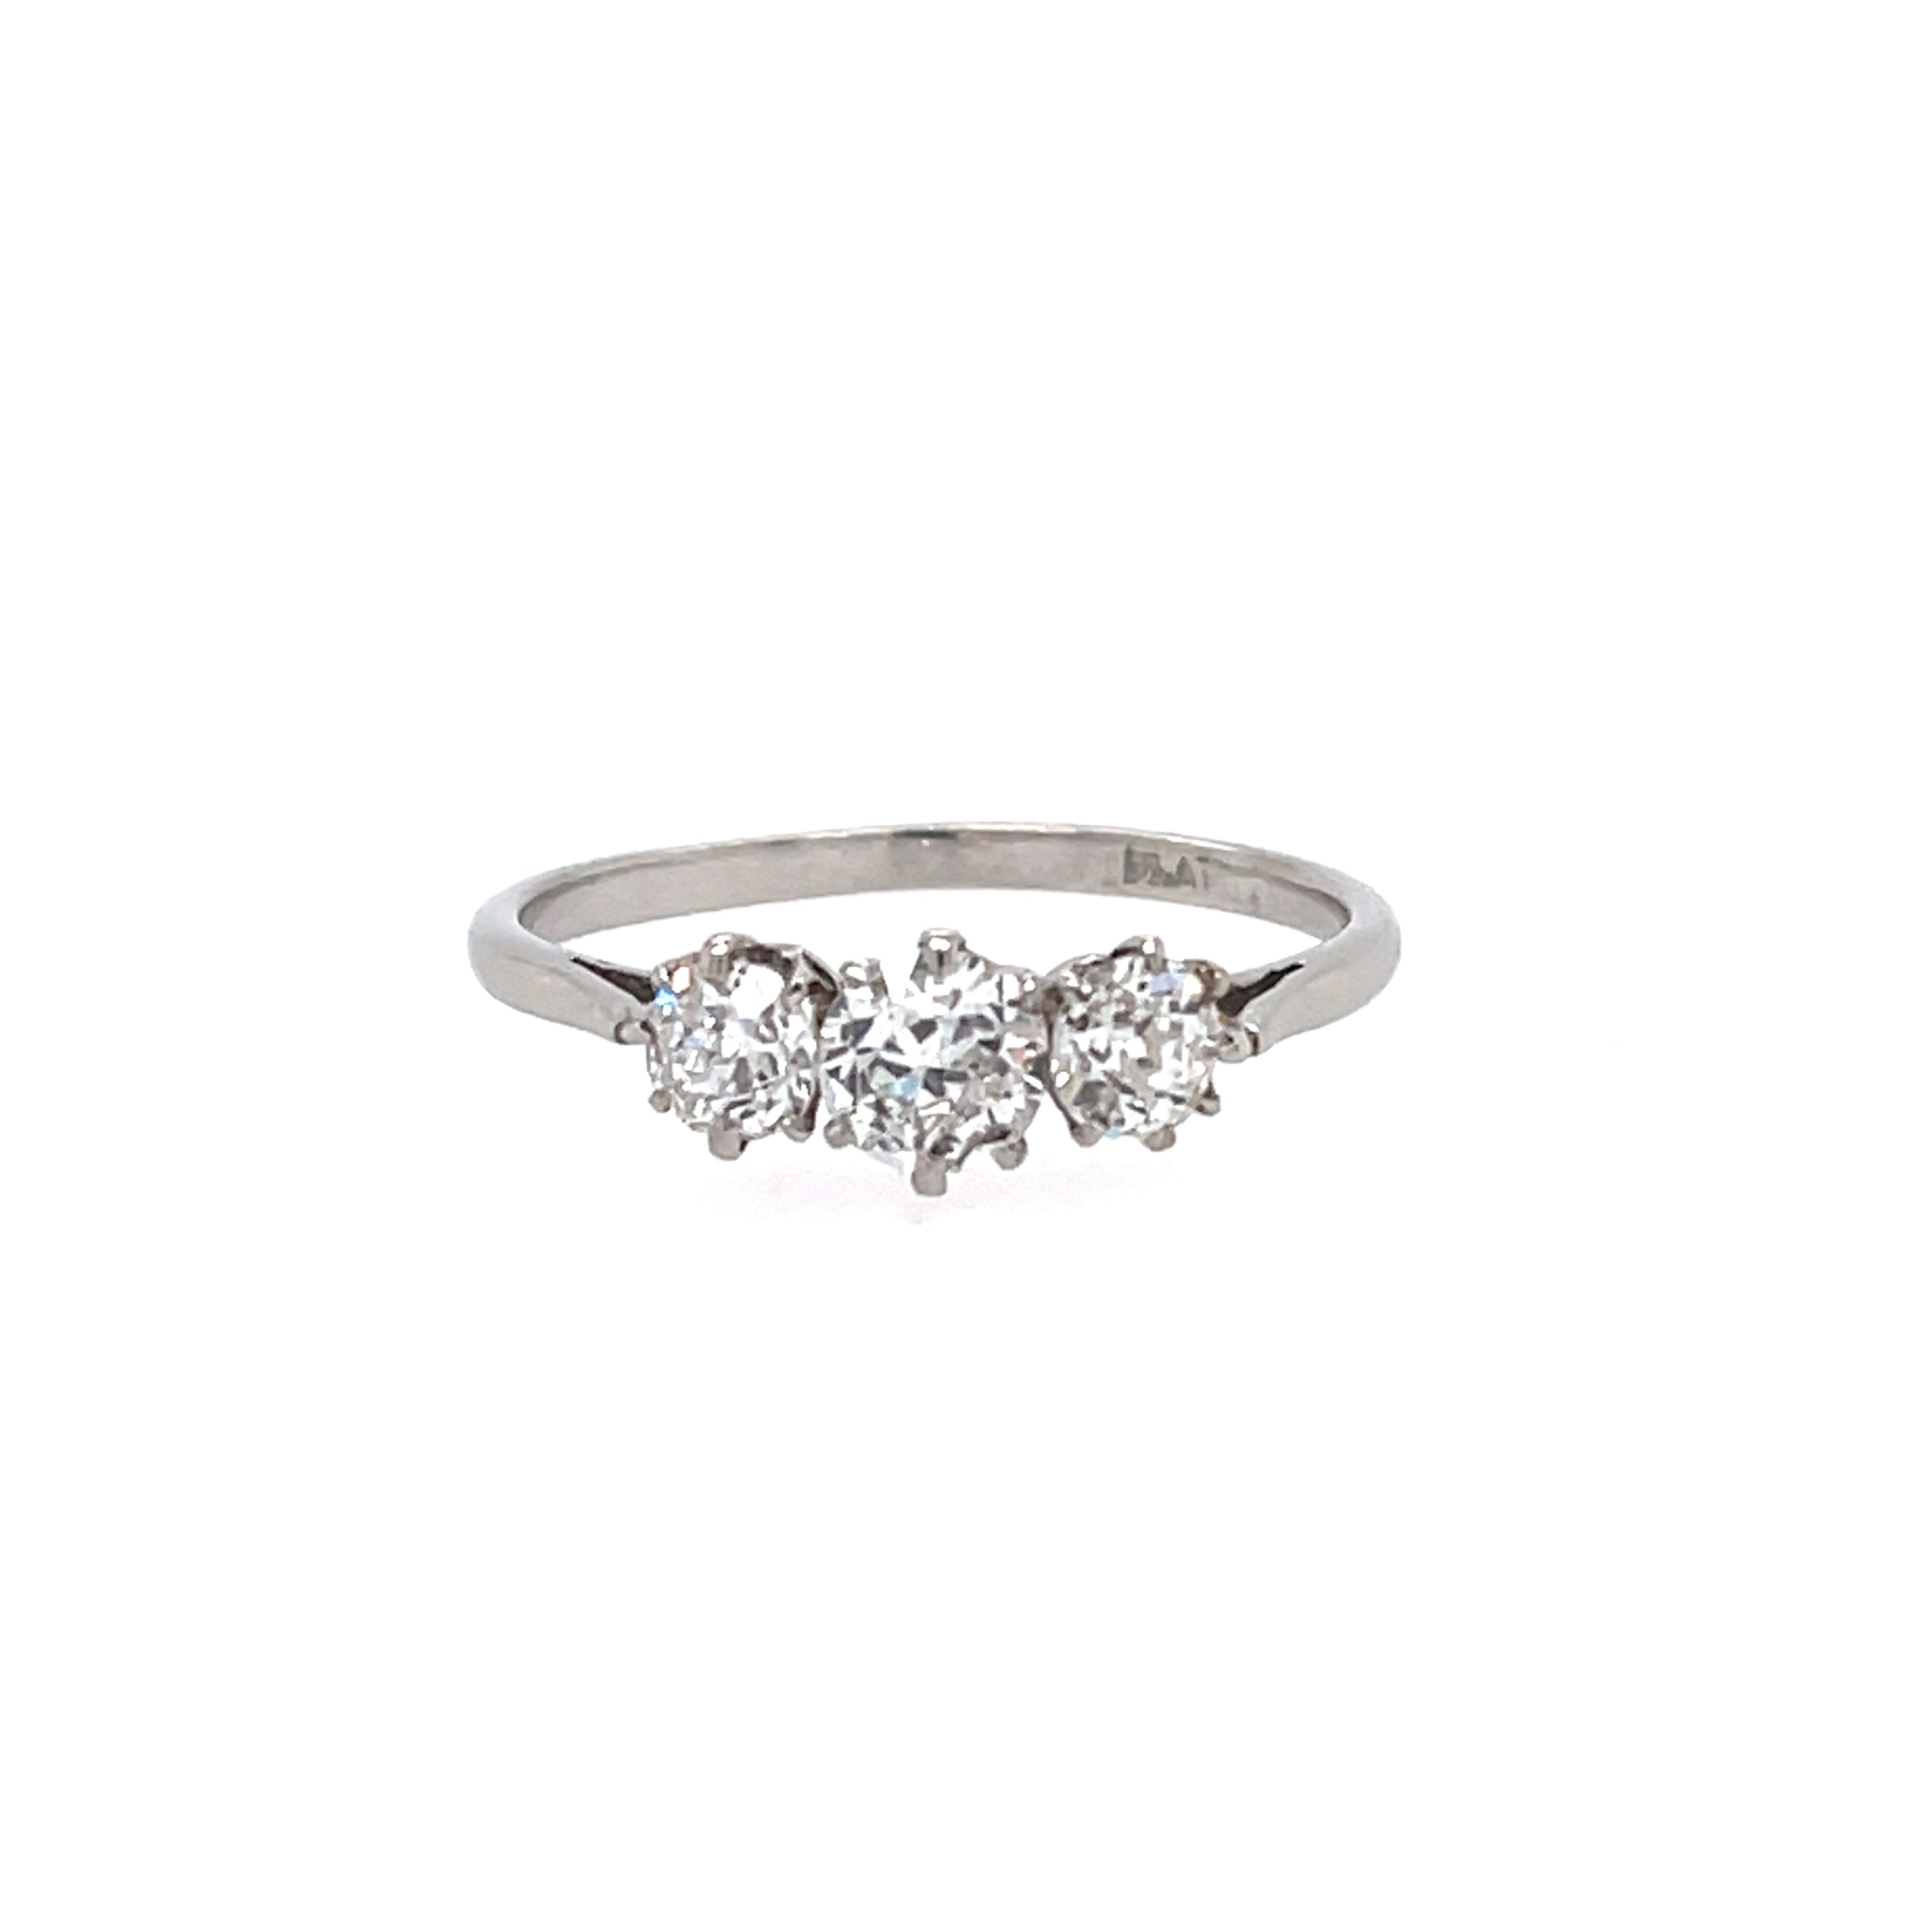 Antique platinum 1.00ct Old European Cut Diamond Three Stone Engagement Ring Certified